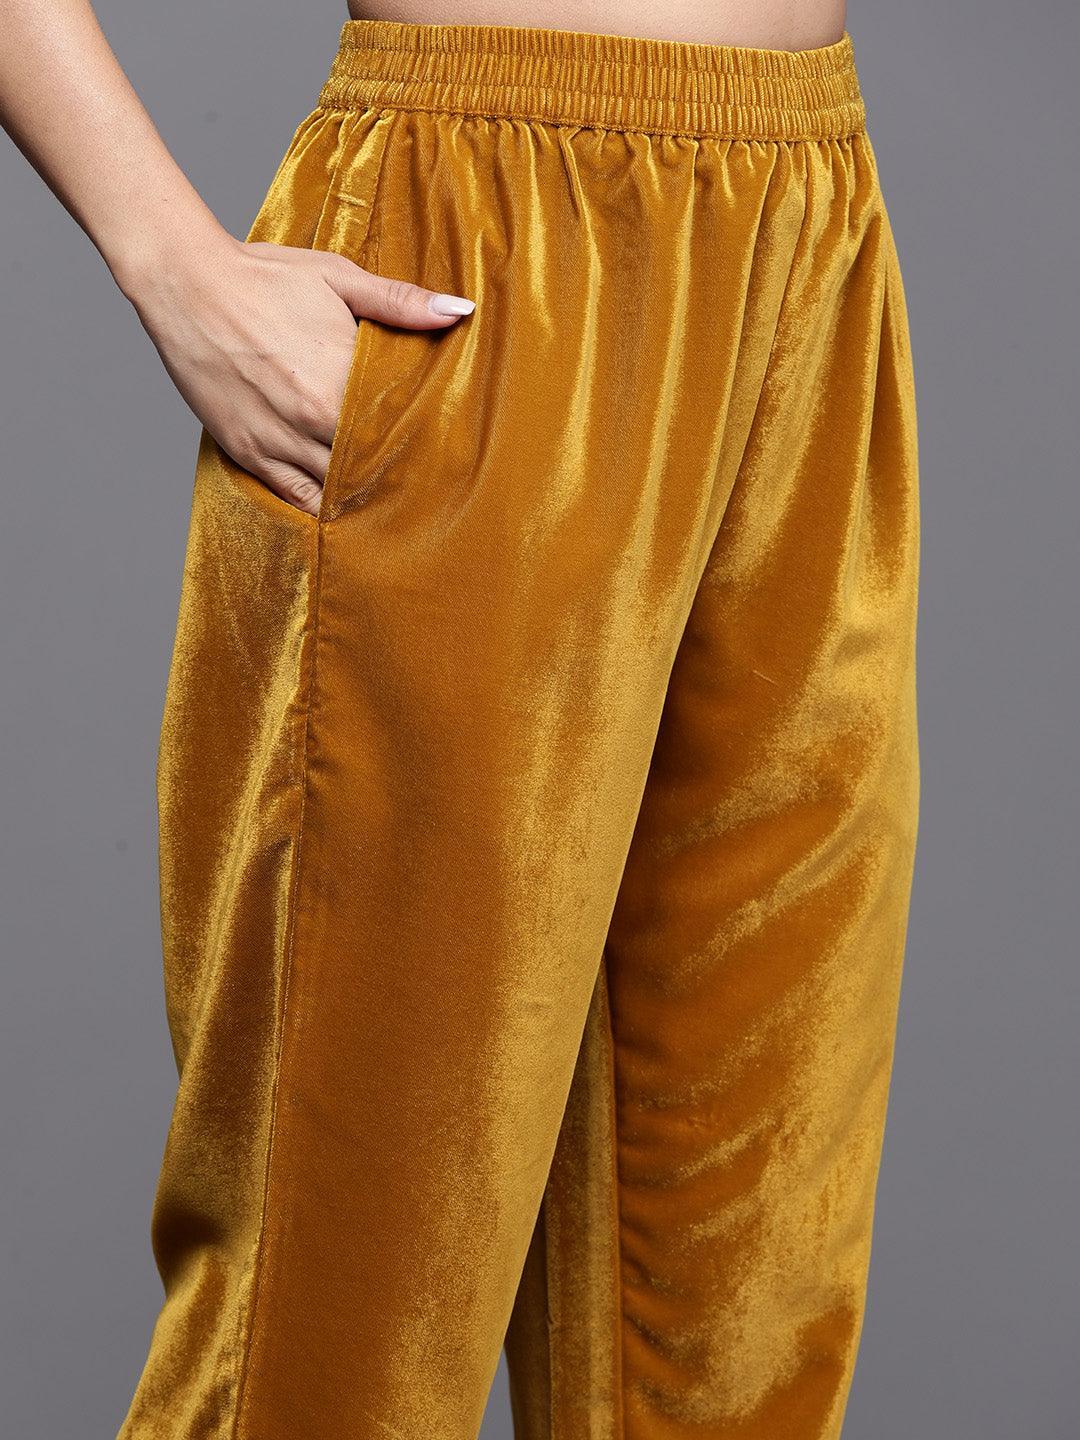 Mustard Yoke Design Velvet Straight Suit With Dupatta